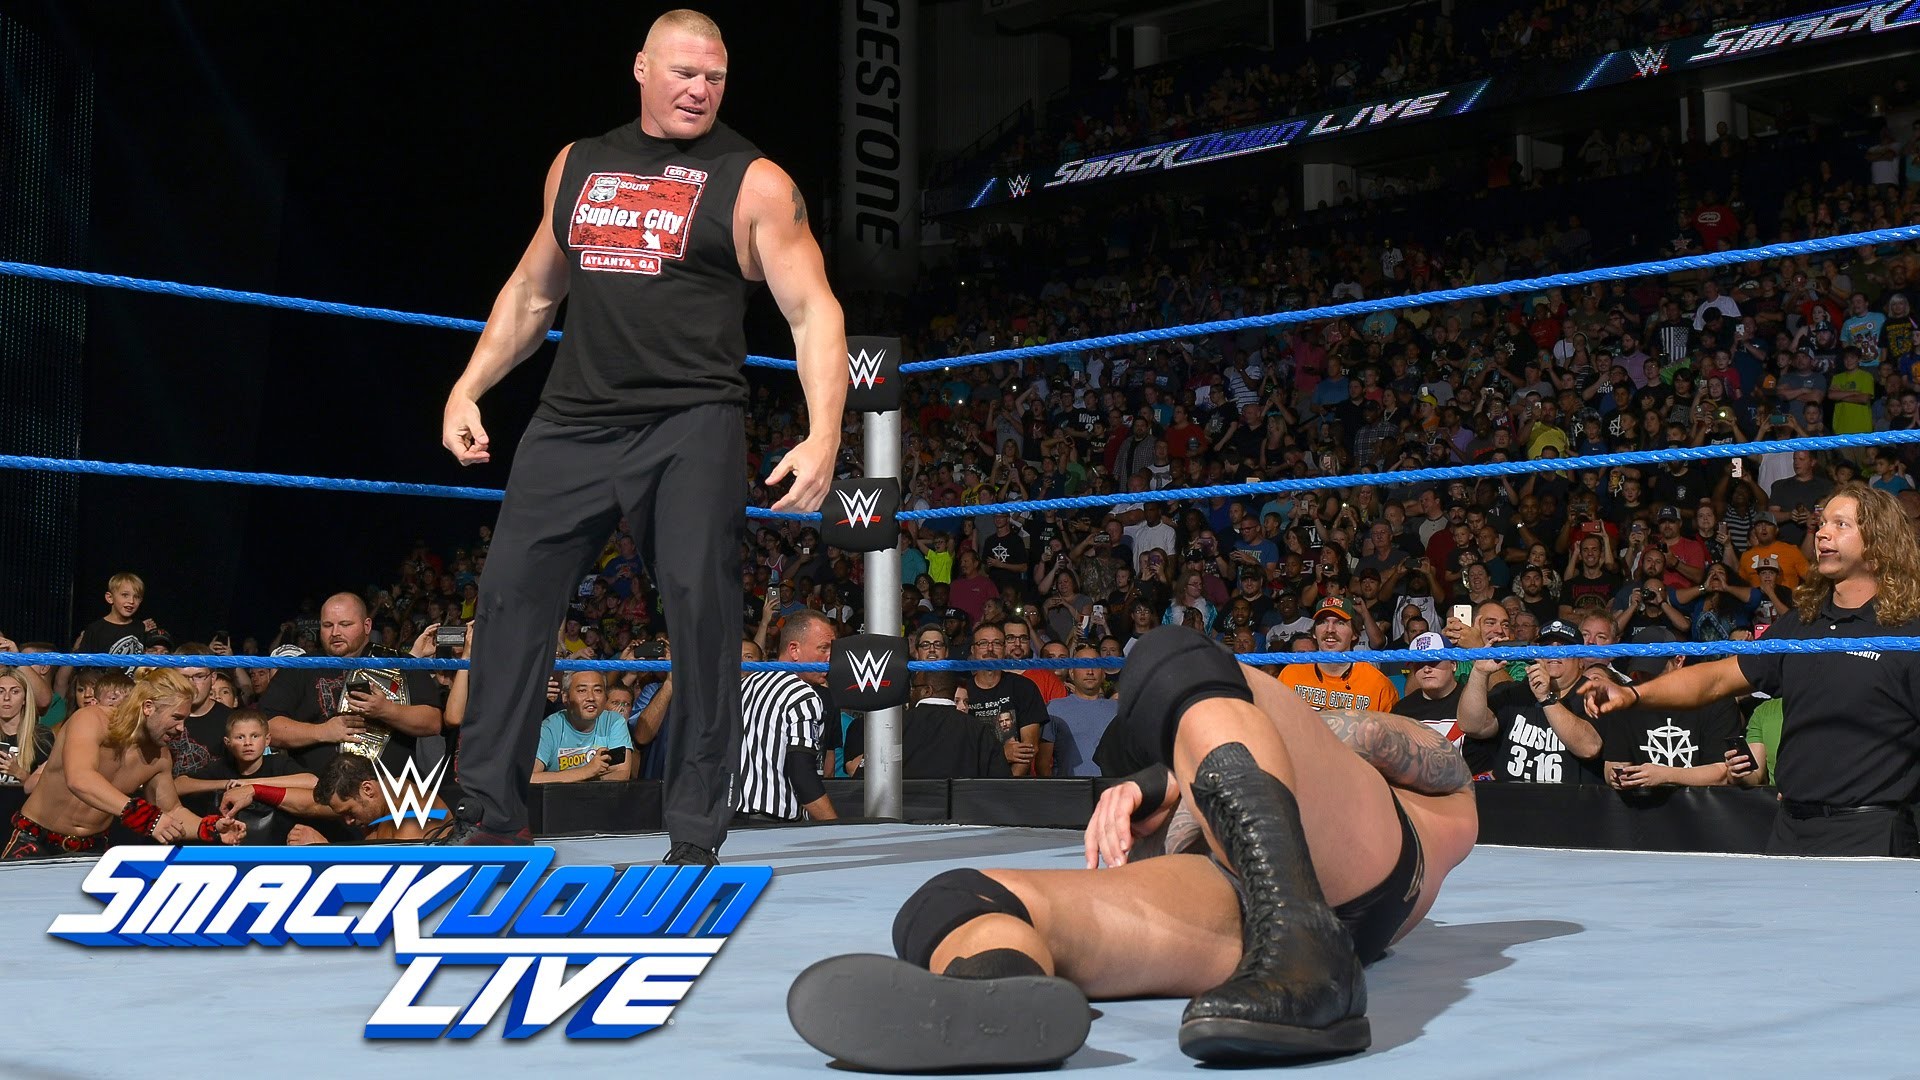 1920x1080 Brock Lesnar invades SmackDown Live: SmackDown Live, Aug. 2, 2016 - YouTube